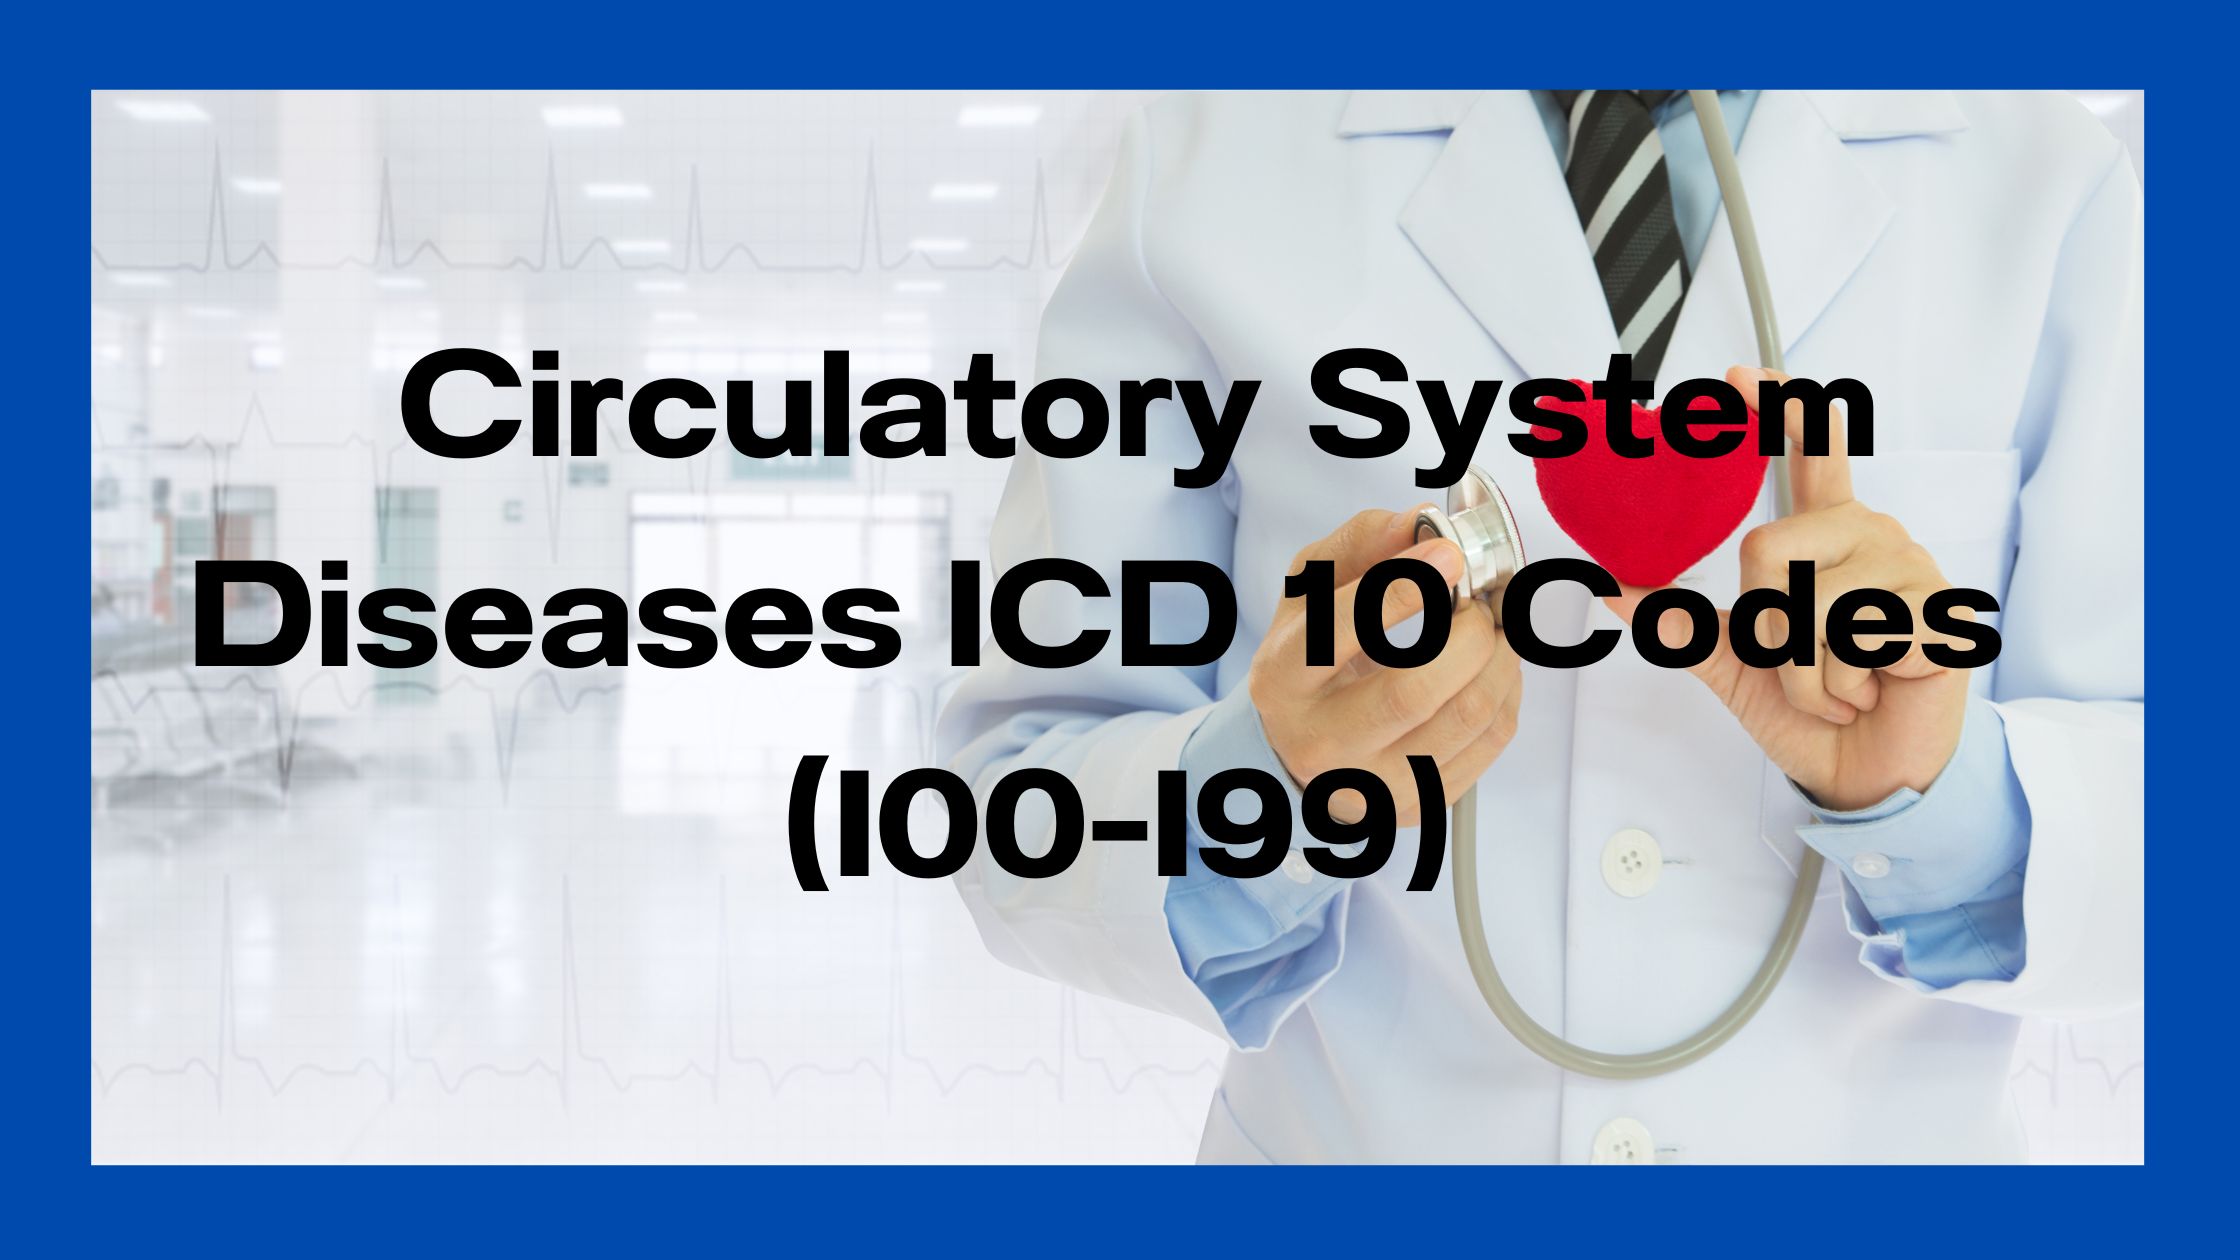 Circulatory system ICD 10 codes